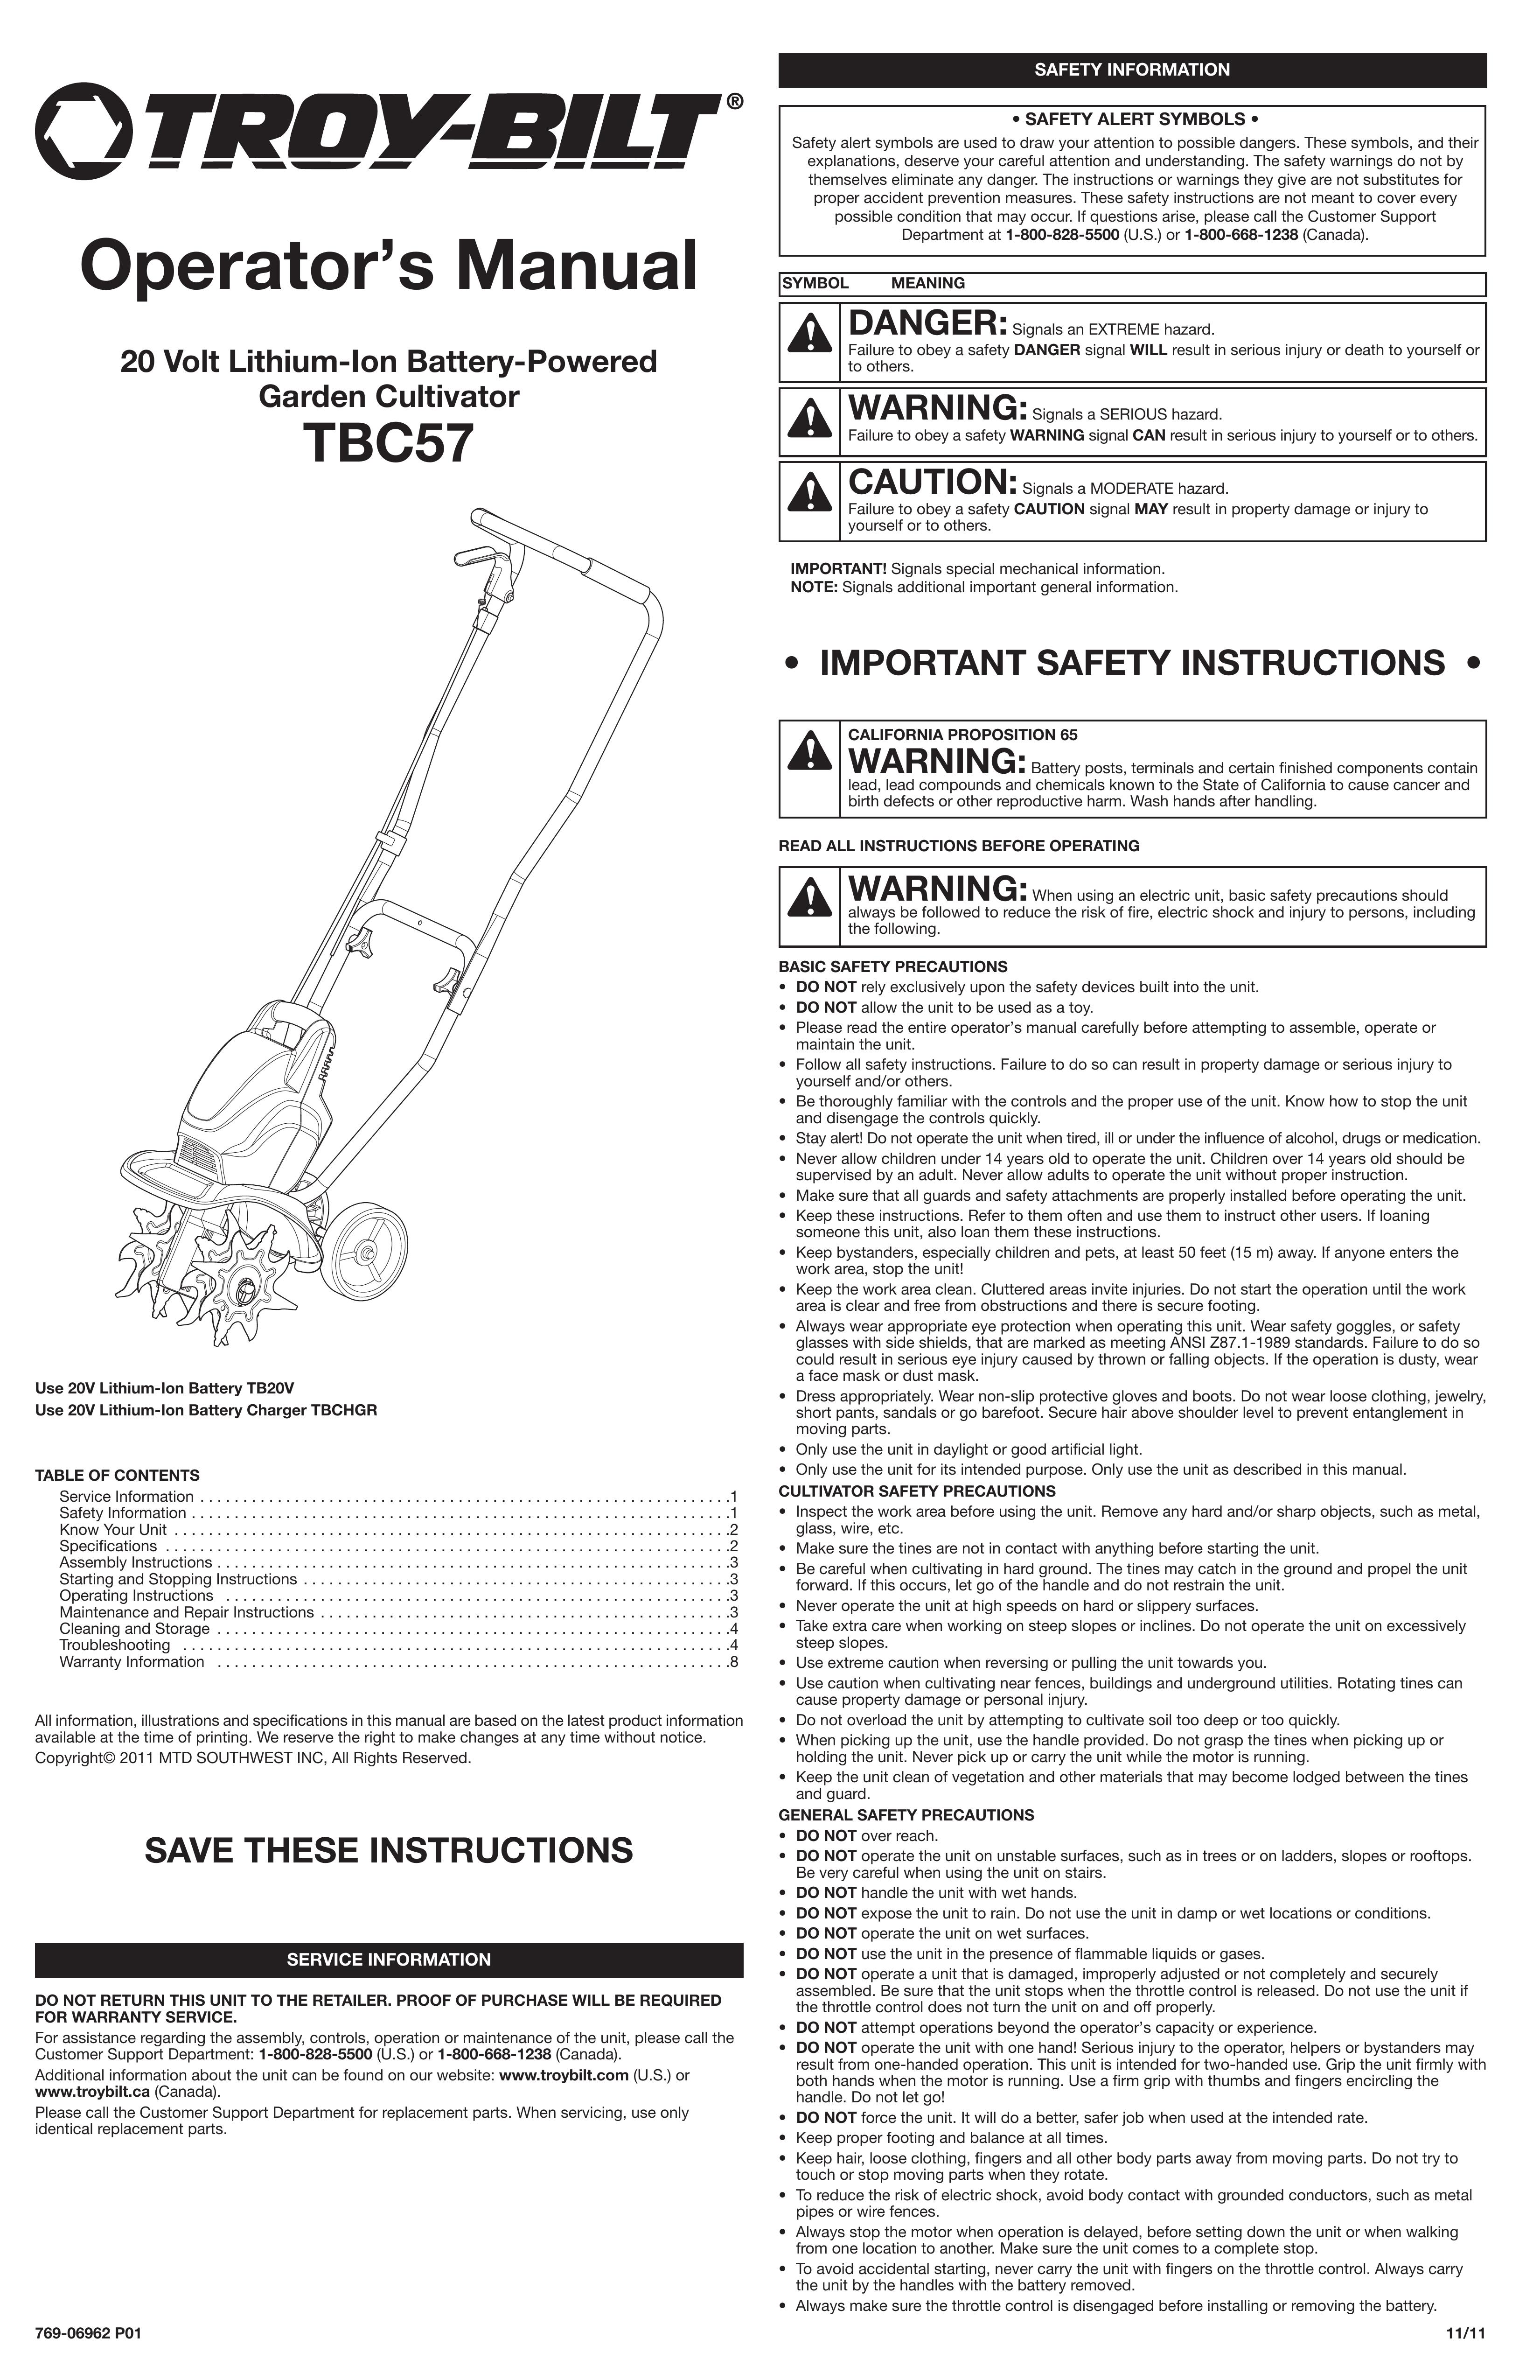 Troy-Bilt TBC57 Cultivator User Manual